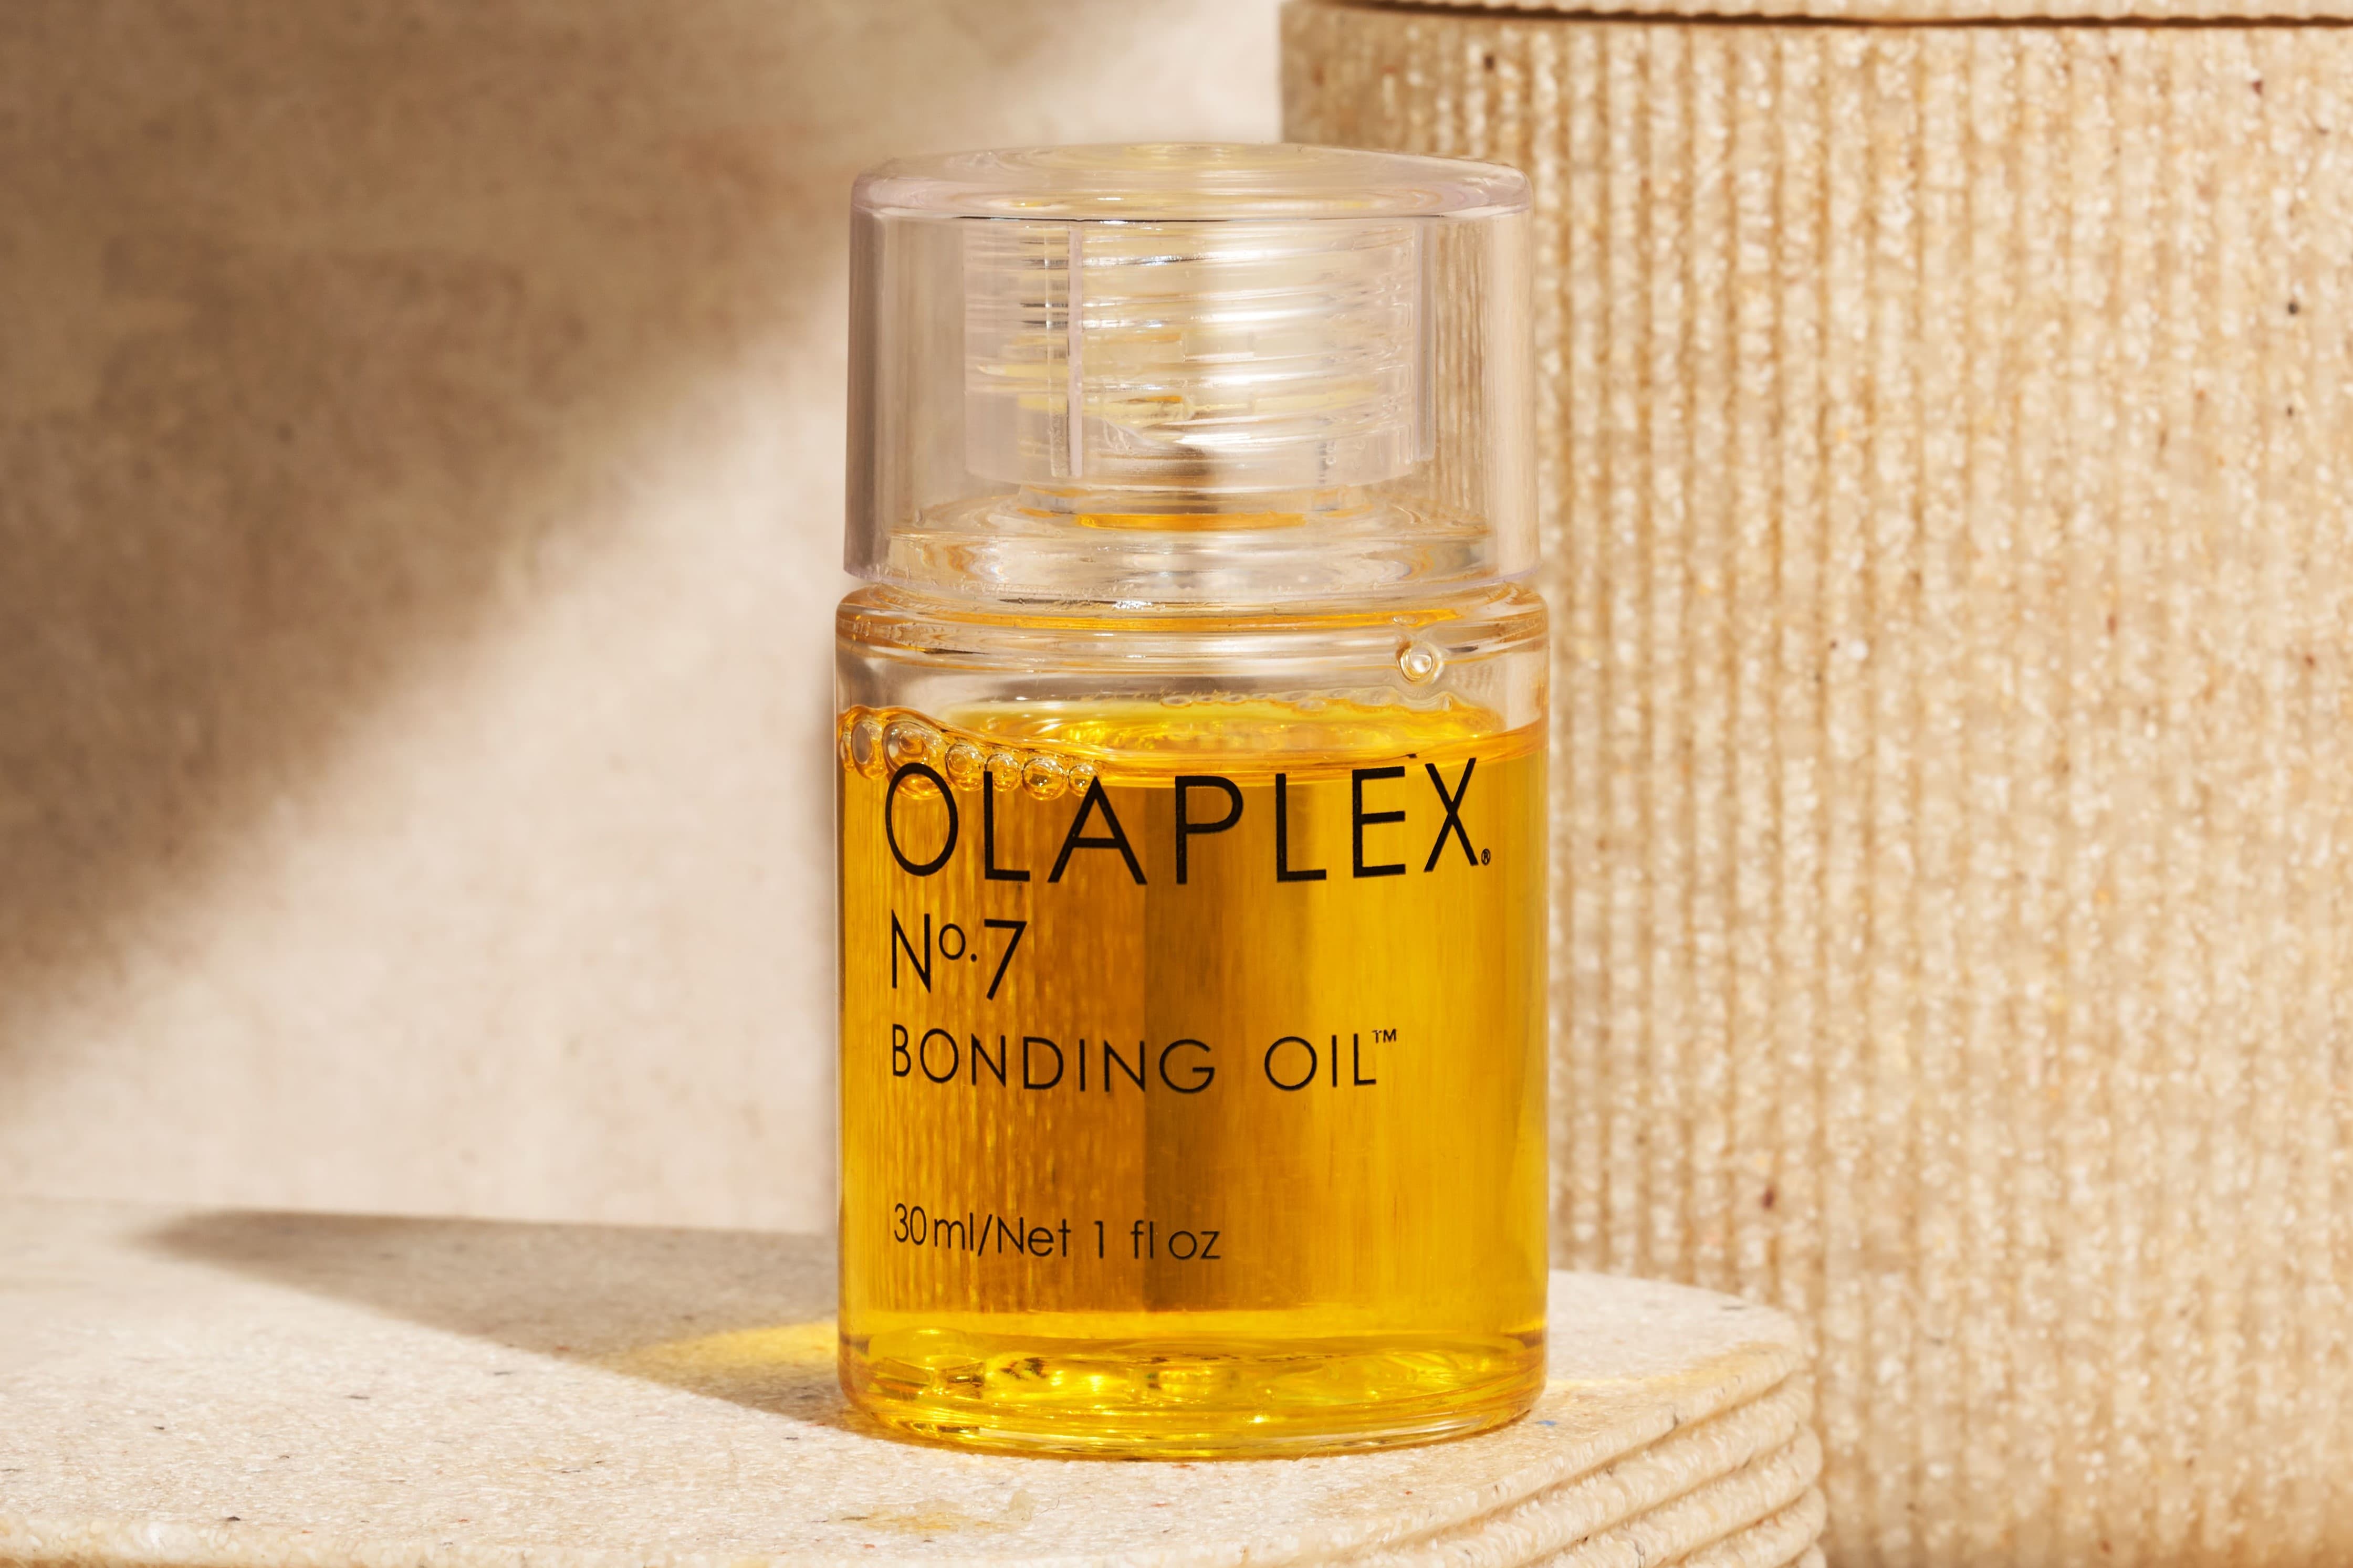 No. 7 Bonding Hair Oil - Olaplex